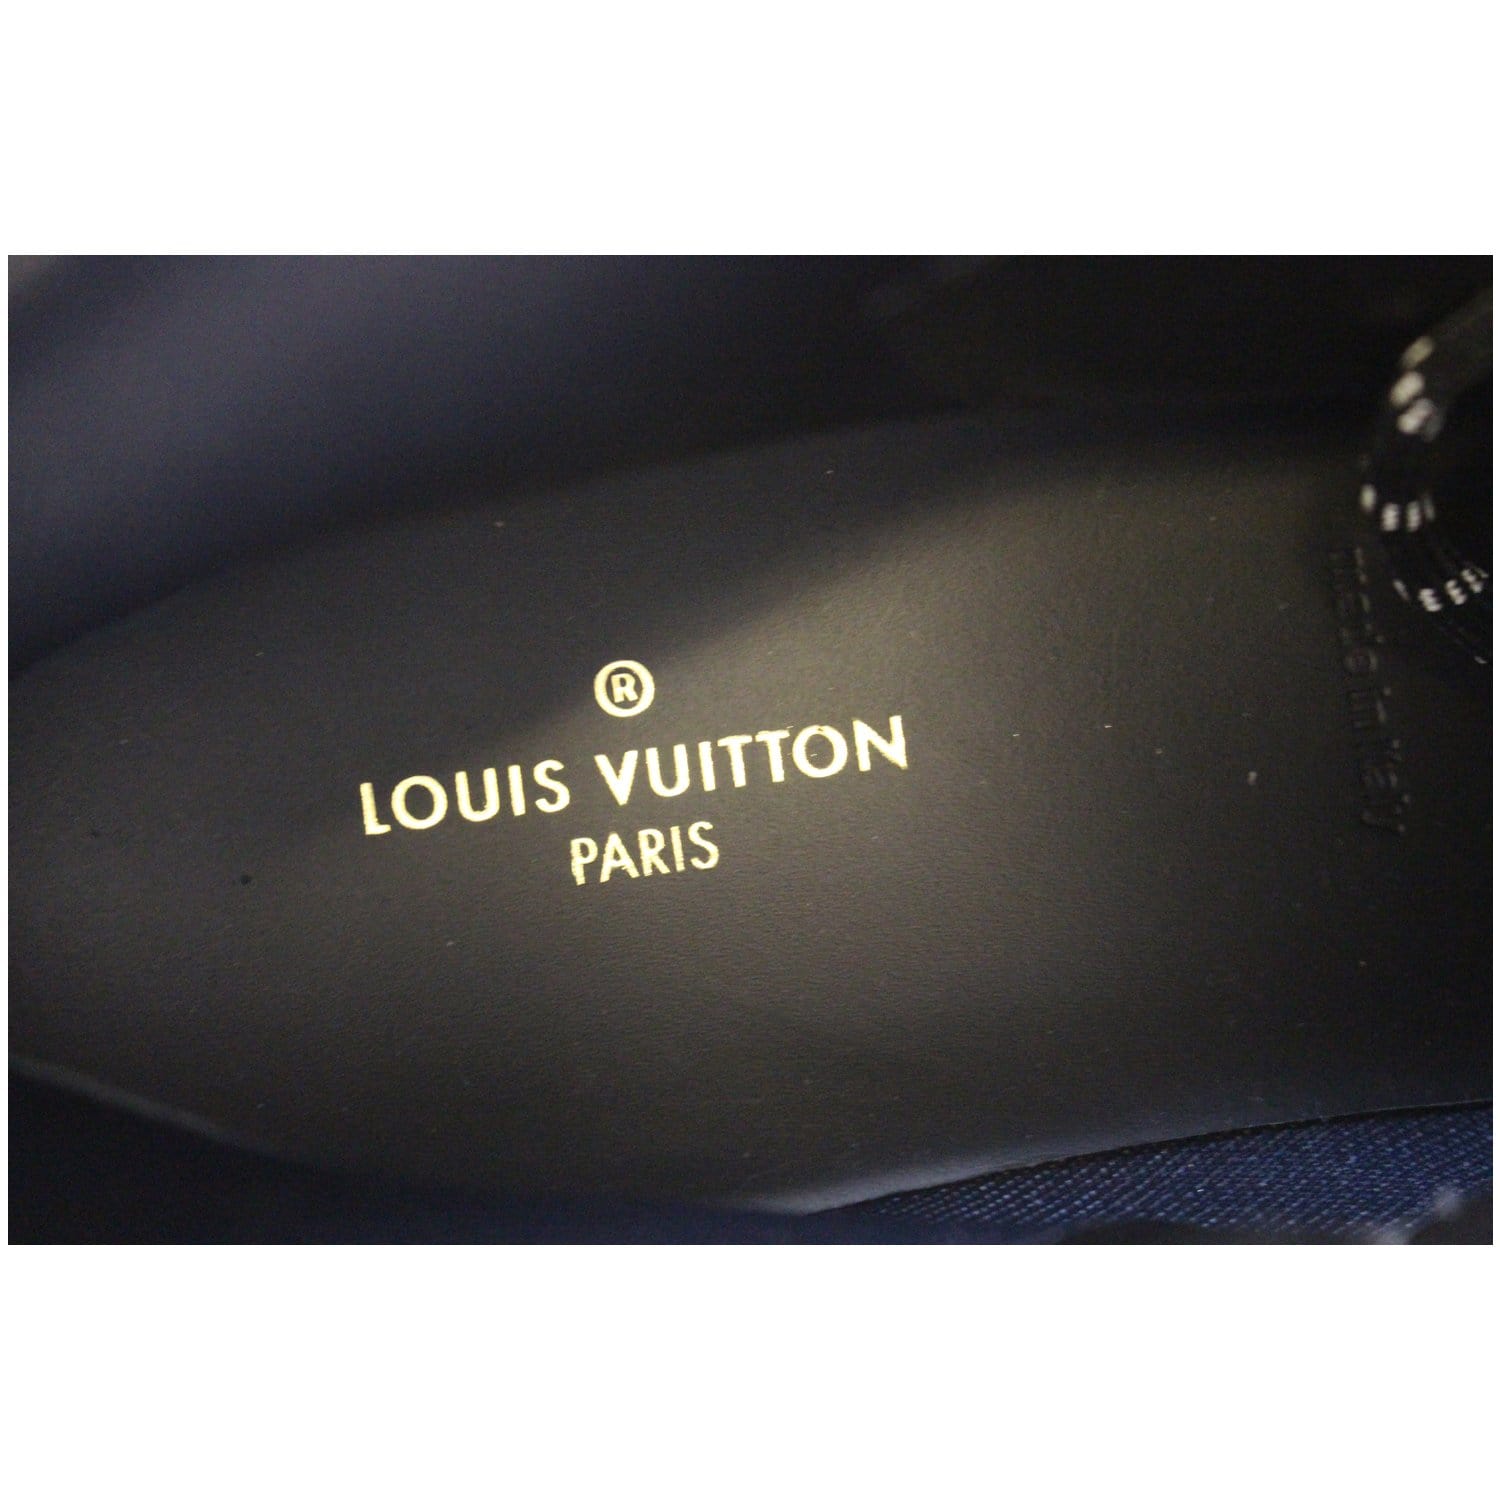 Lv outland boots Louis Vuitton Brown size 40 EU in Rubber - 36089929